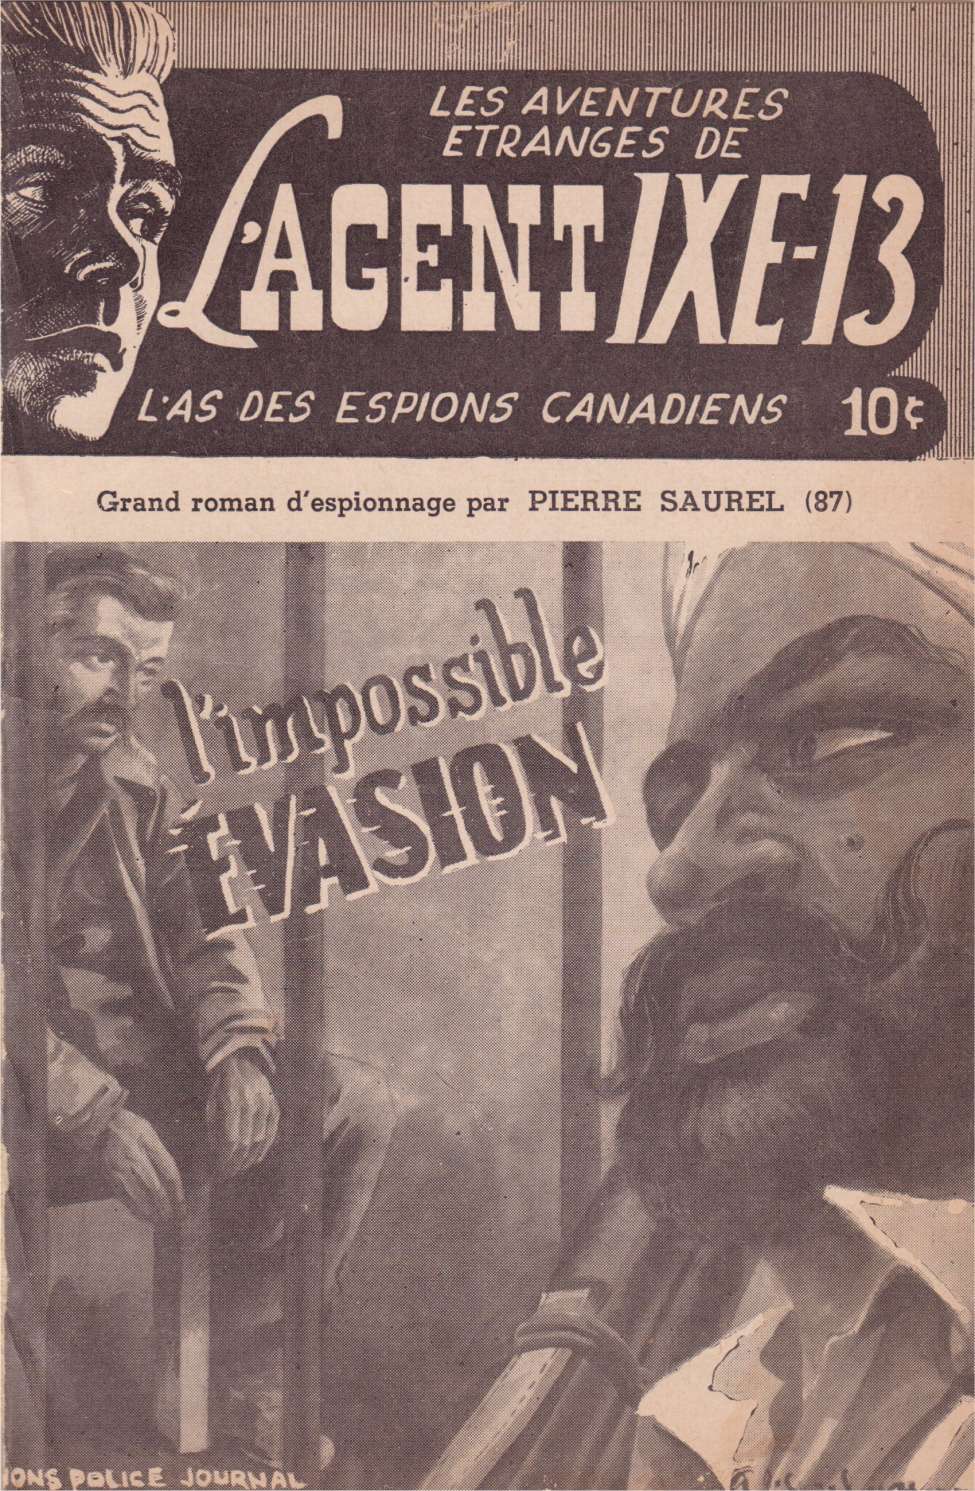 Comic Book Cover For L'Agent IXE-13 v2 87 - L'impossible évasion